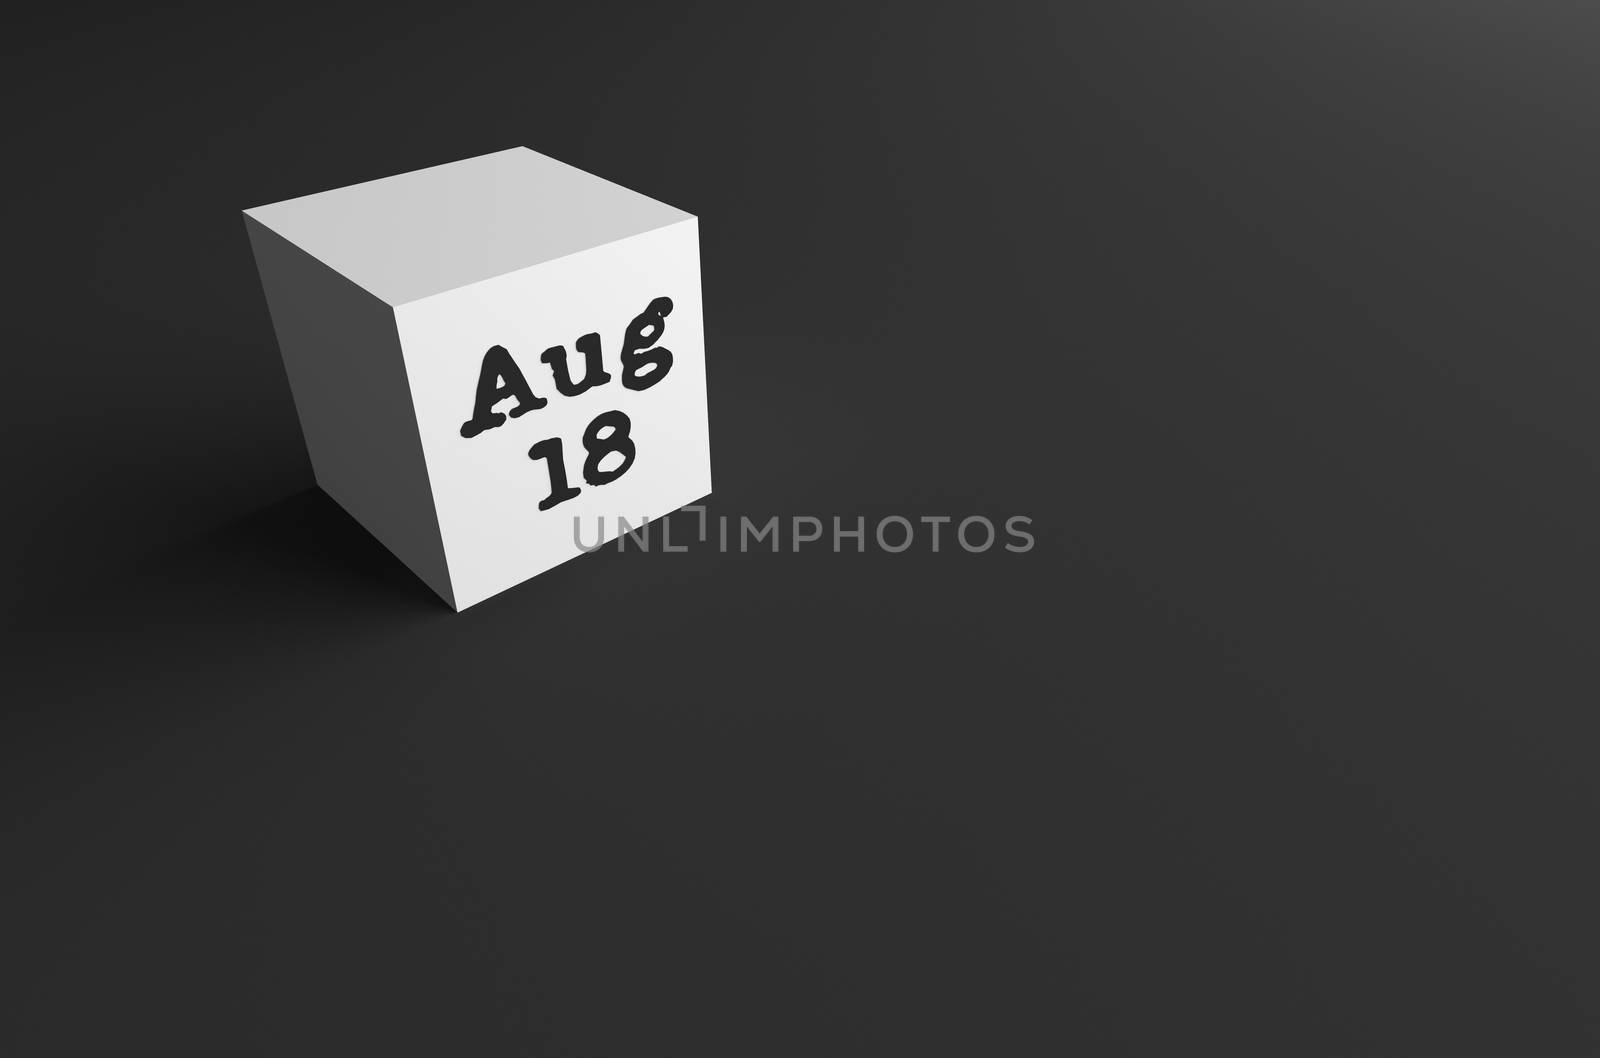 3D RENDERING OF Aug 18 by PrettyTG